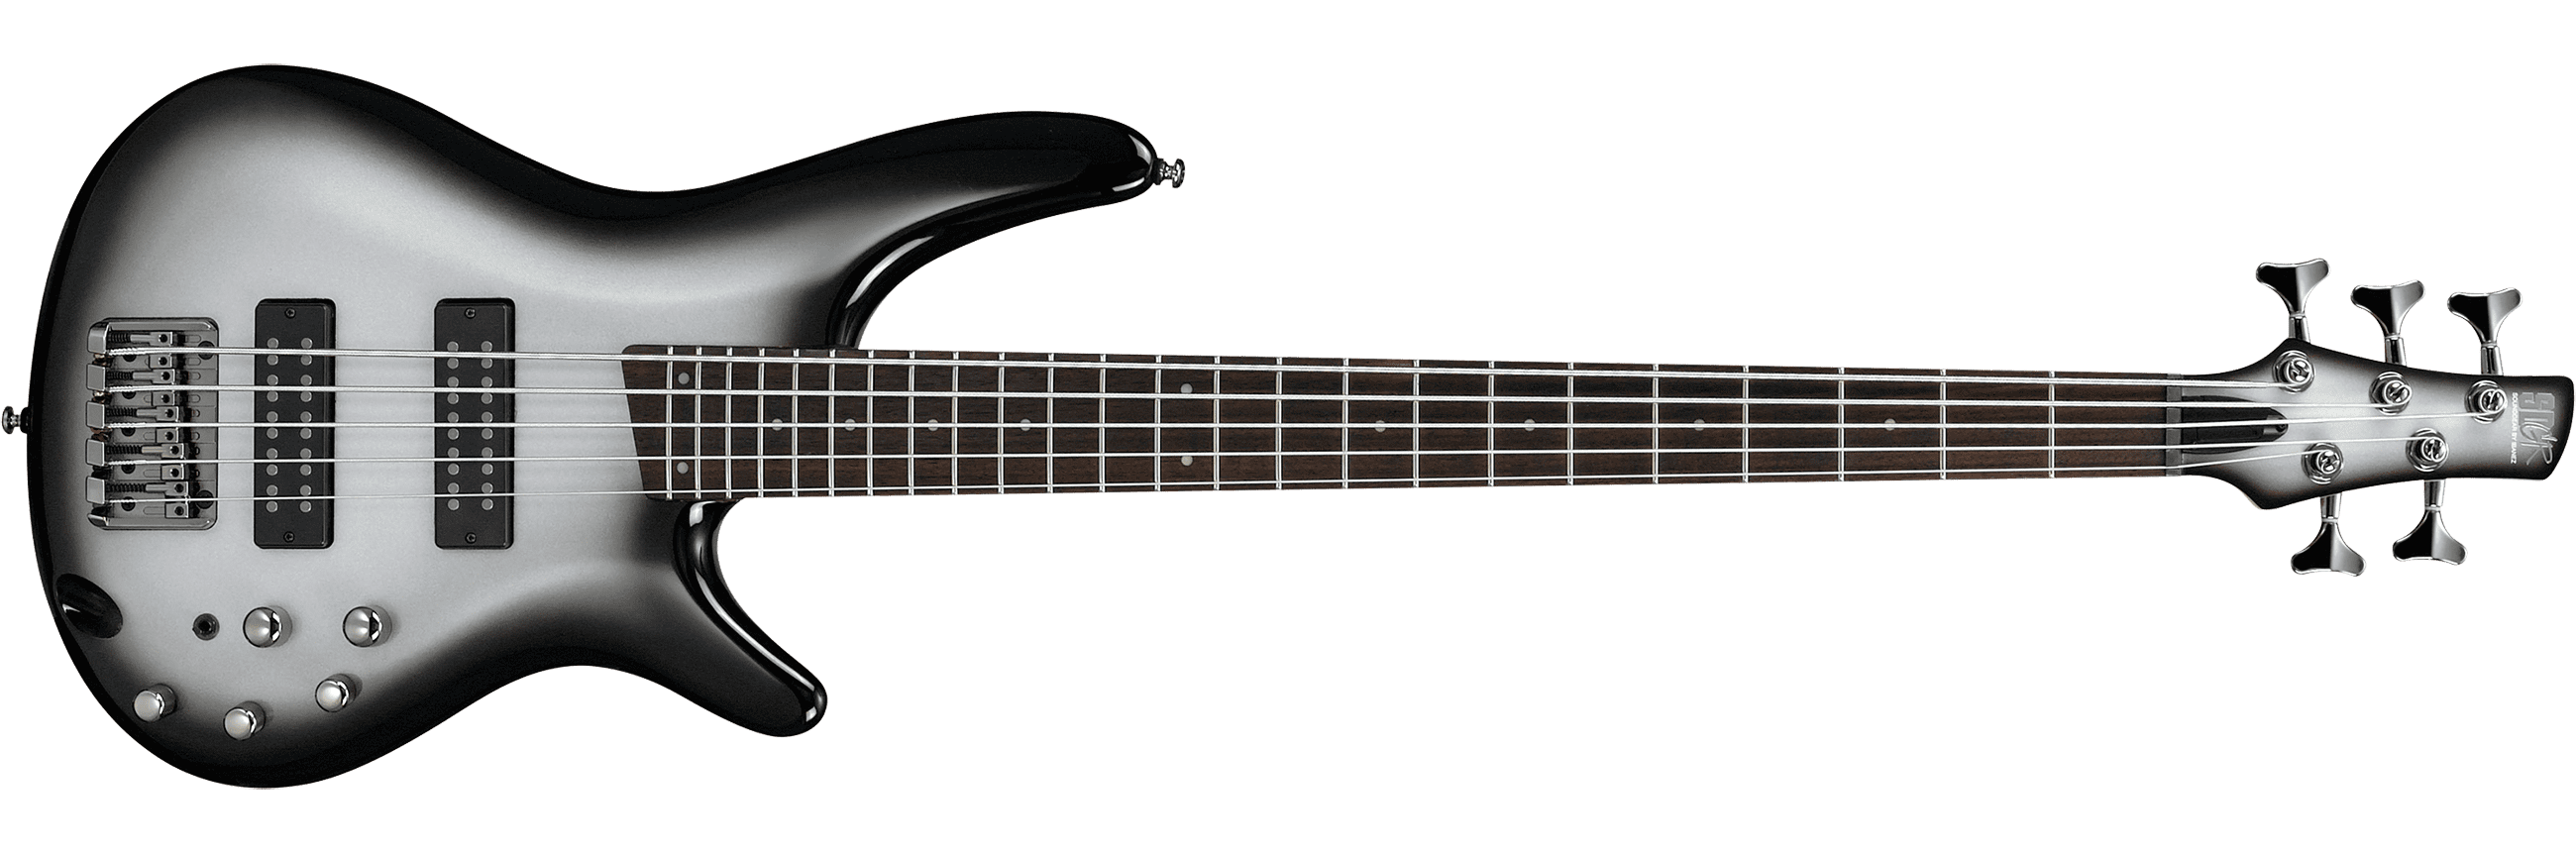 Ibanez SR305EMSS 5 String Electric Bass Guitar MSS:Metallic Silver Sunburst